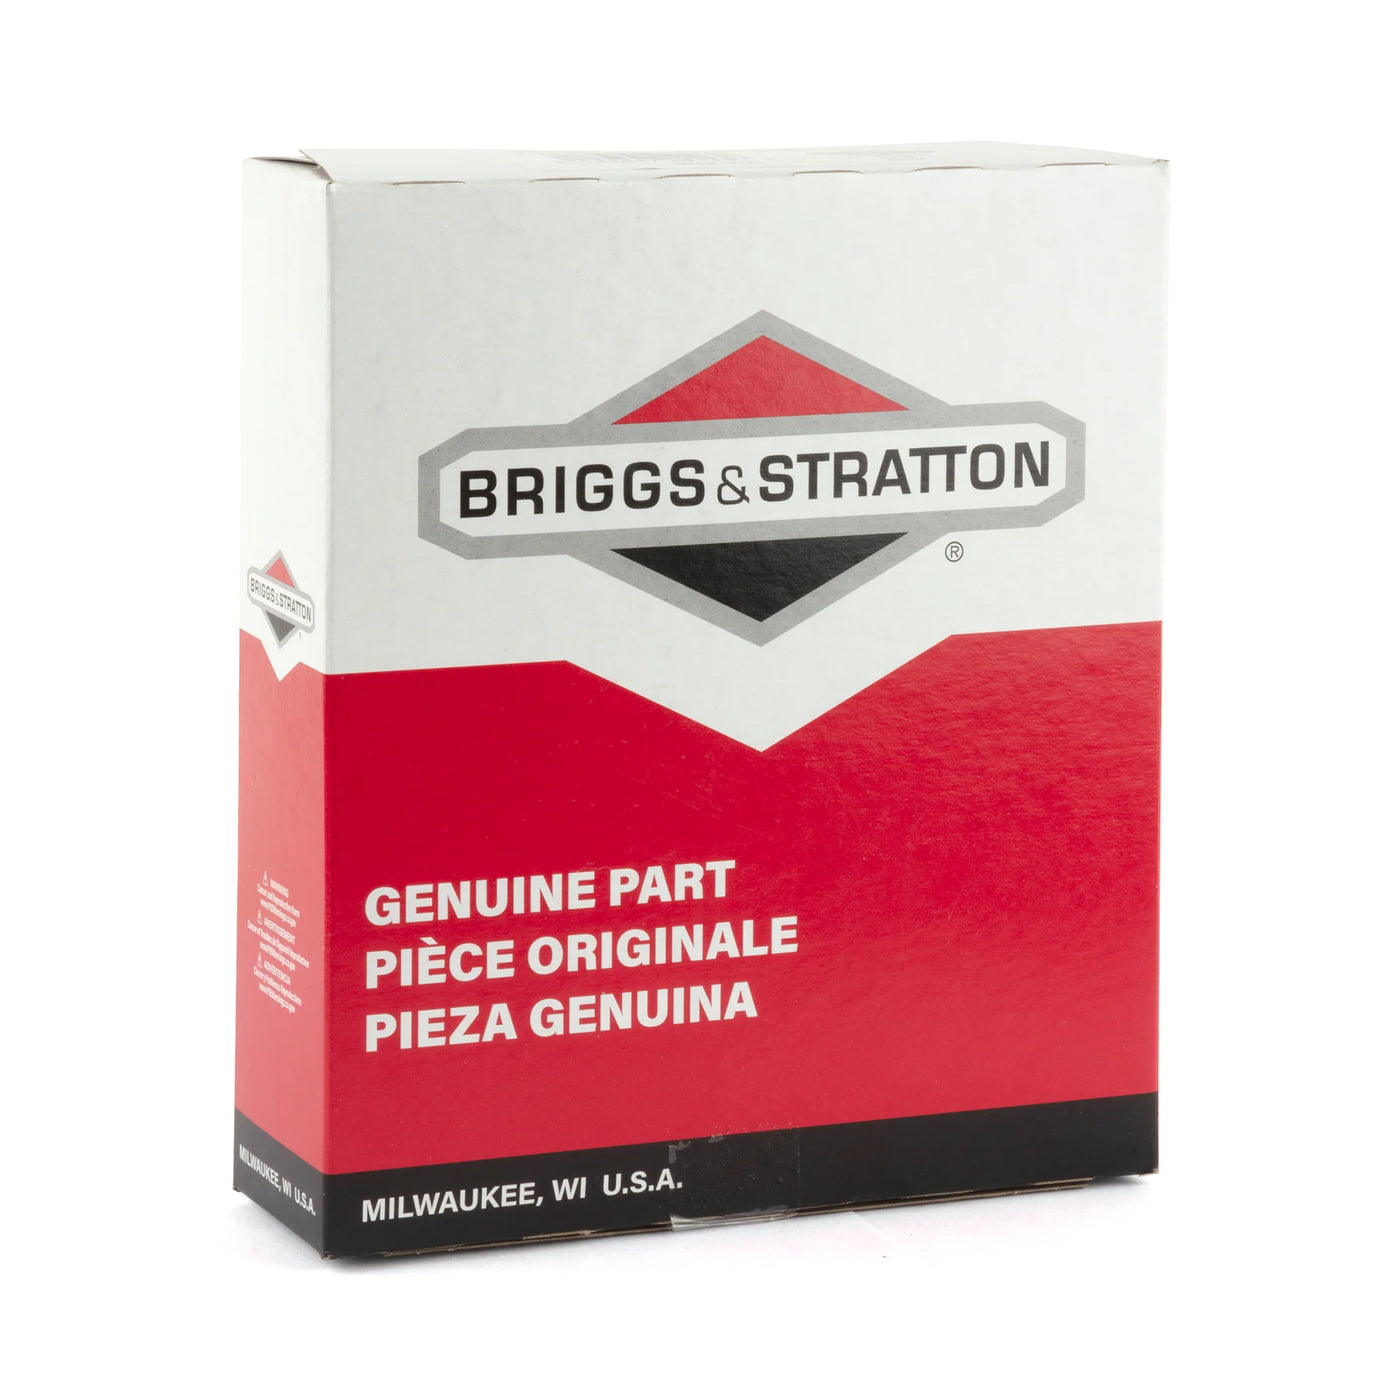 Briggs & Stratton 20-21hp Intek Filter-A/C Foam Set of (5) 793685